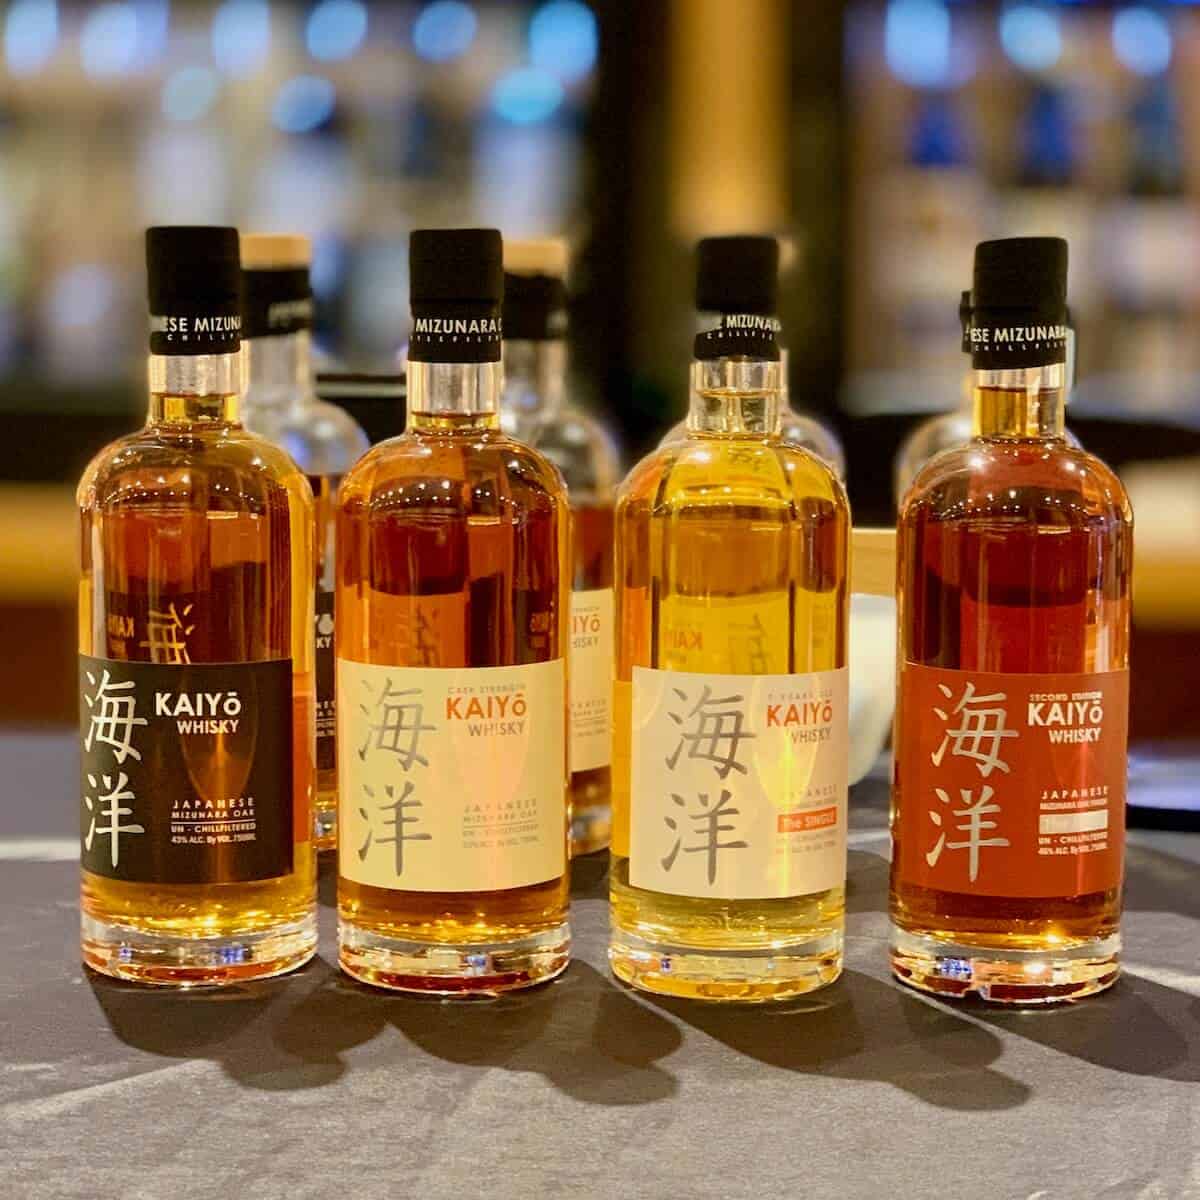 Kaiyo Japanese Whisky lineup on a counter.